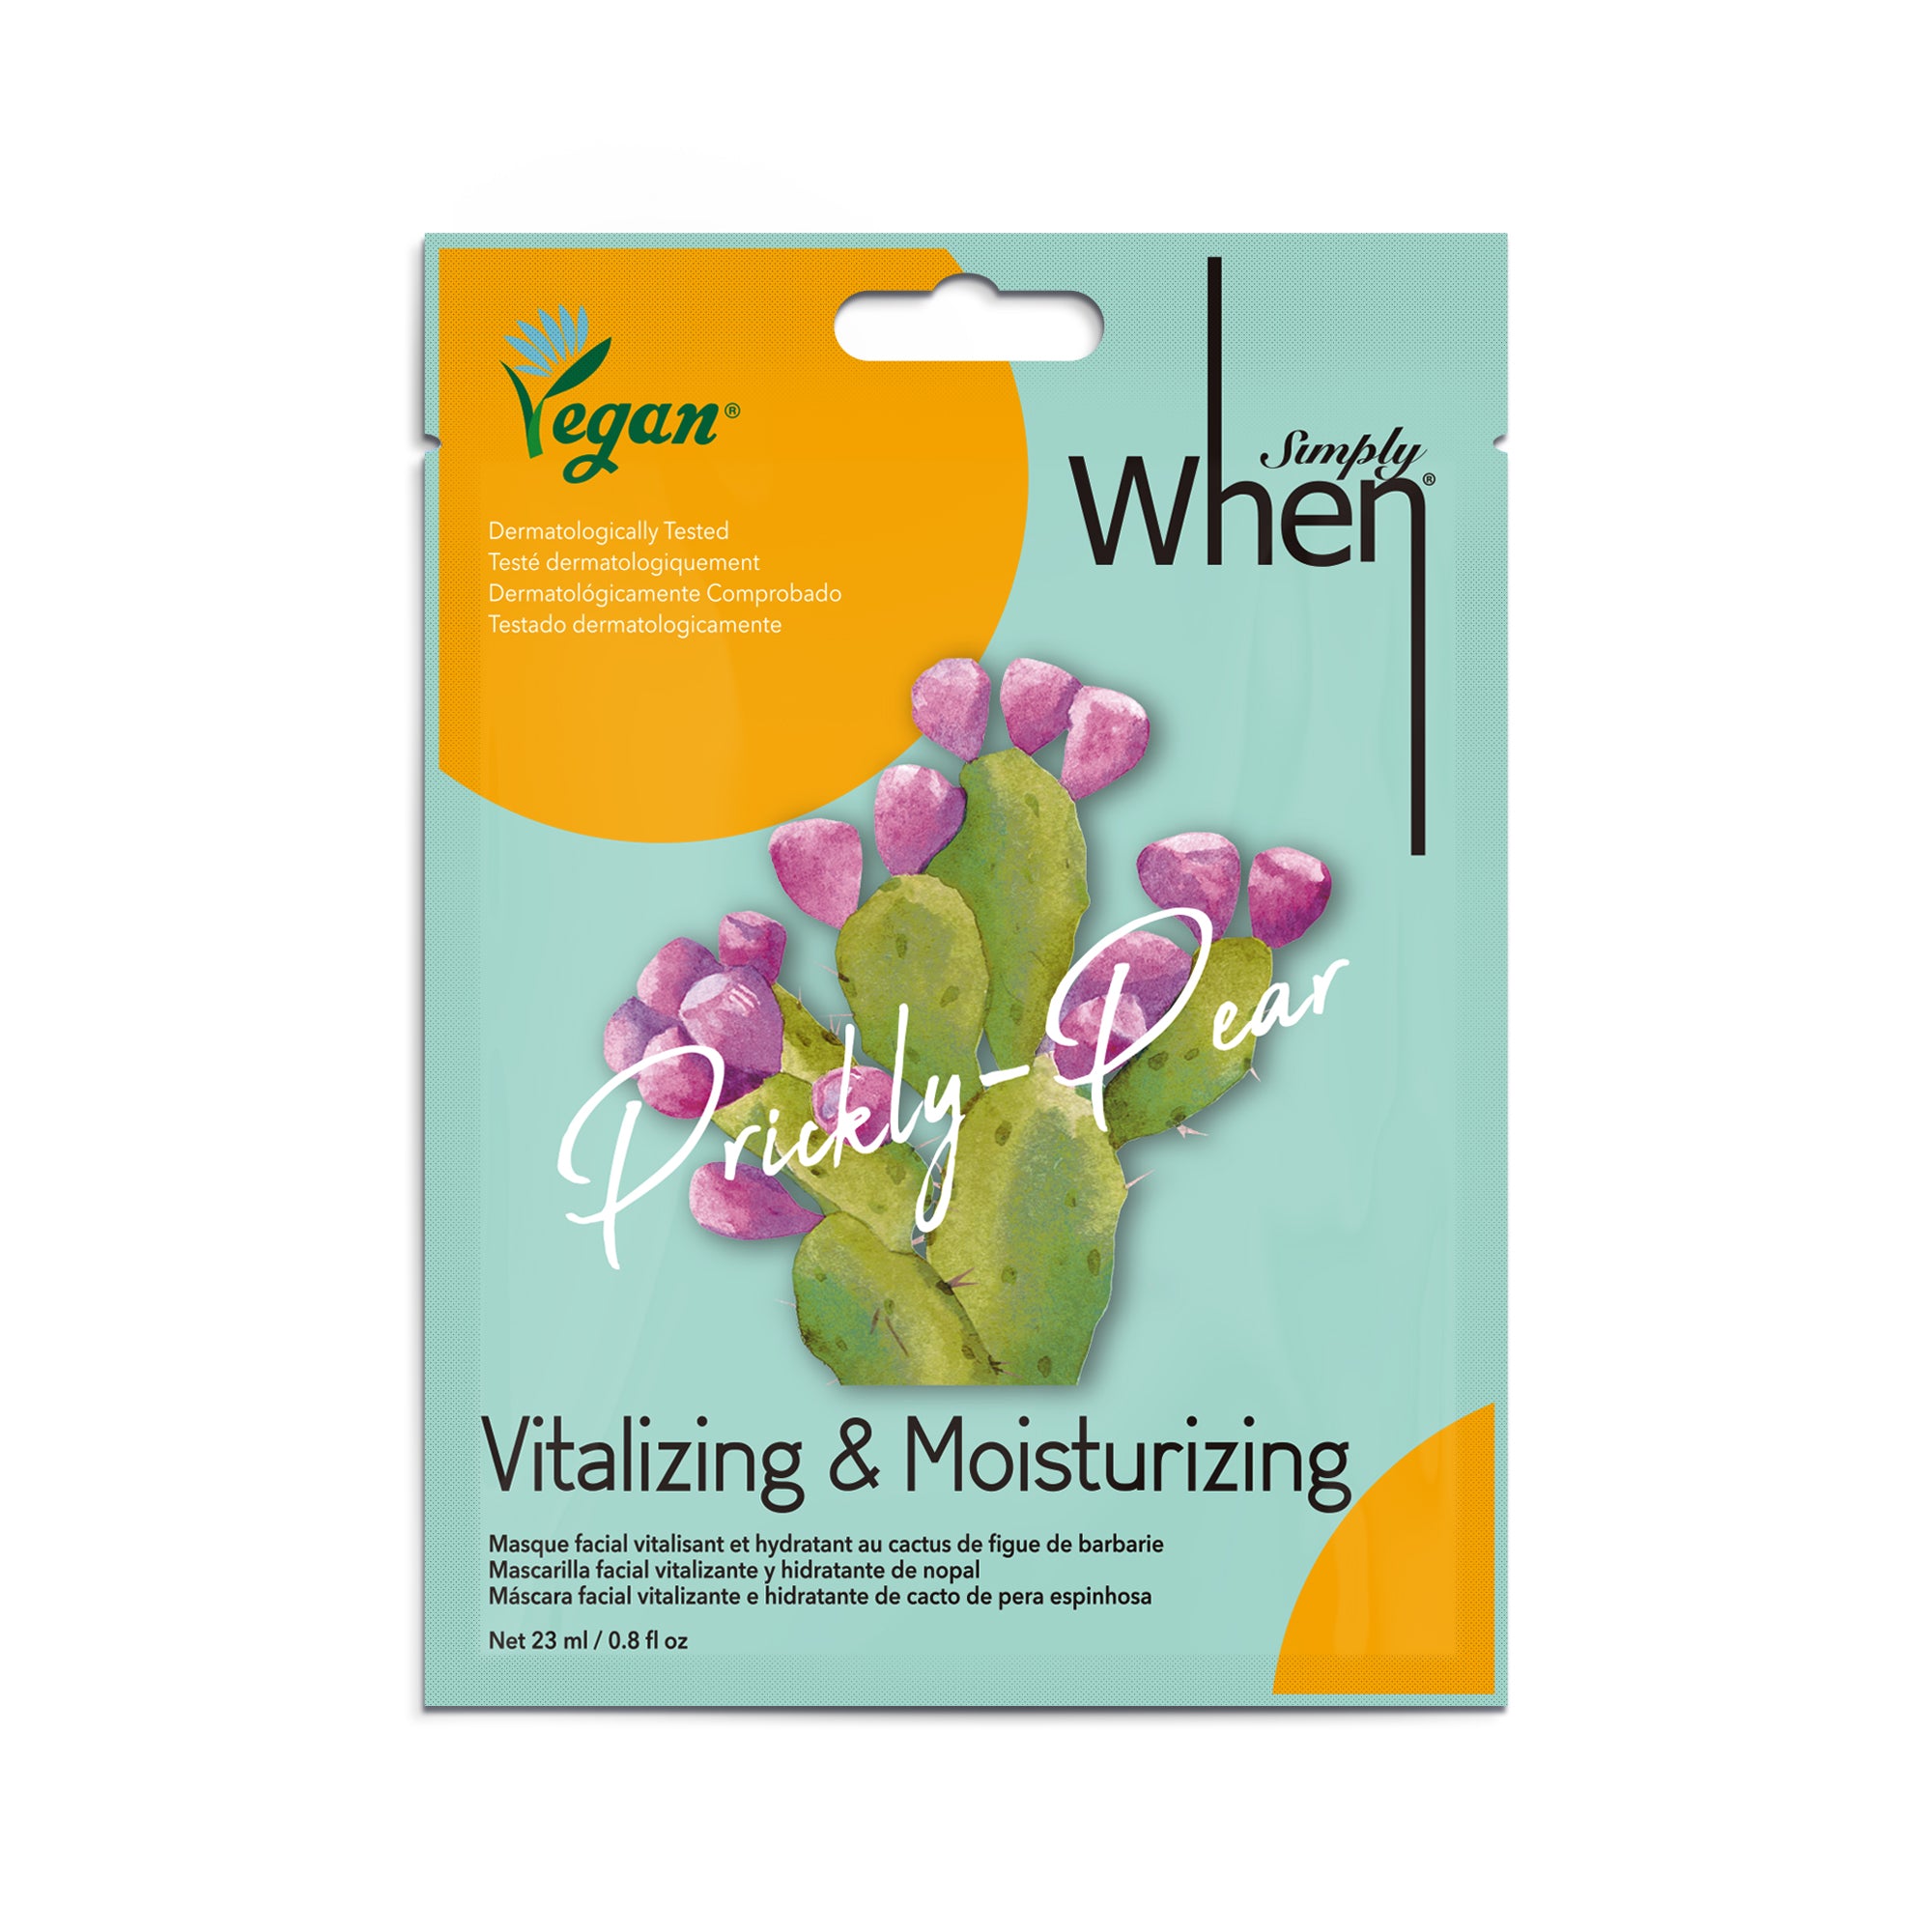 Simply When Vegan Prickly-Pear Vitalizing & Moisturizing Sheet Mask